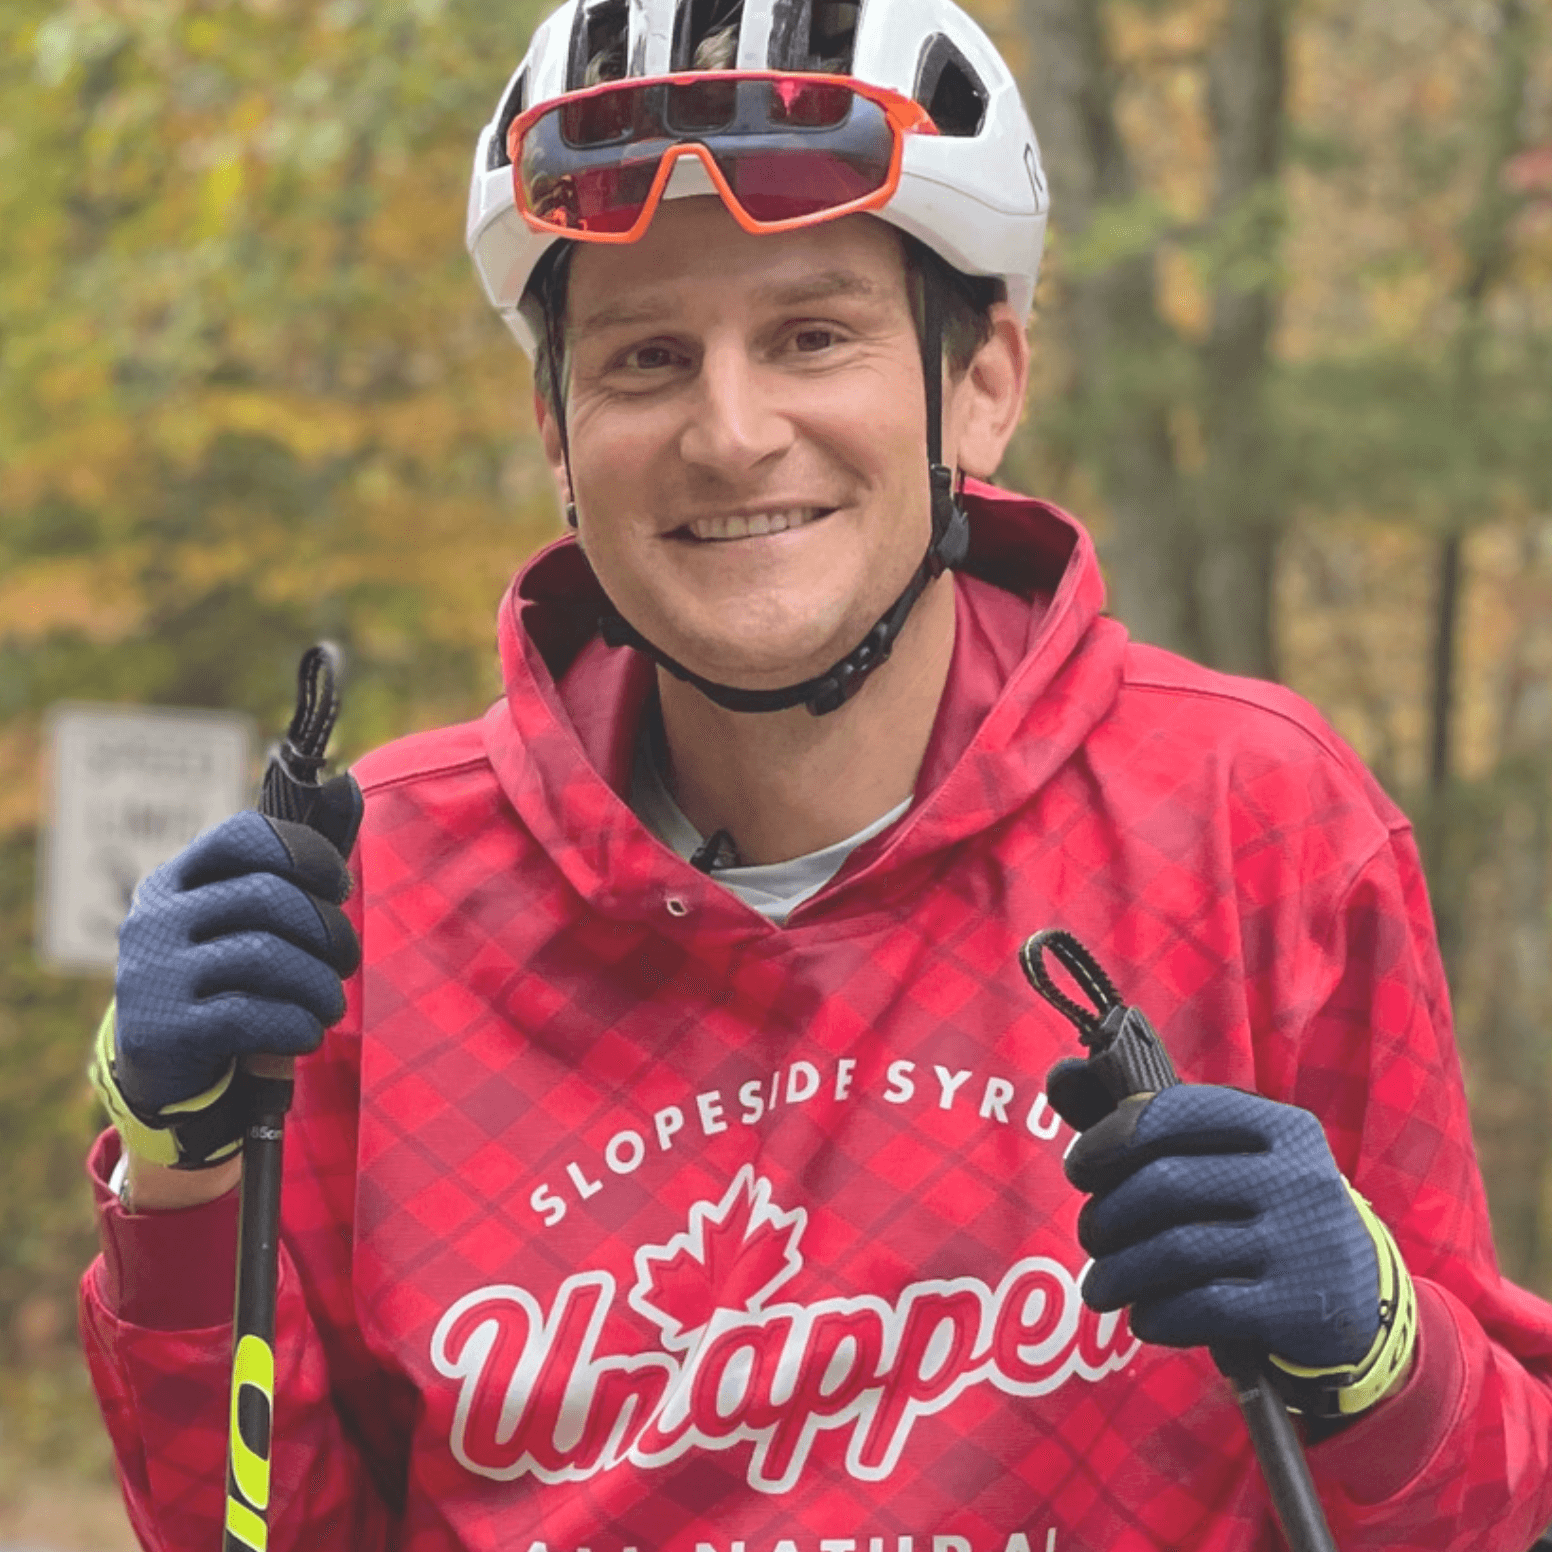 Ted King in a bike helmet and holding ski poles